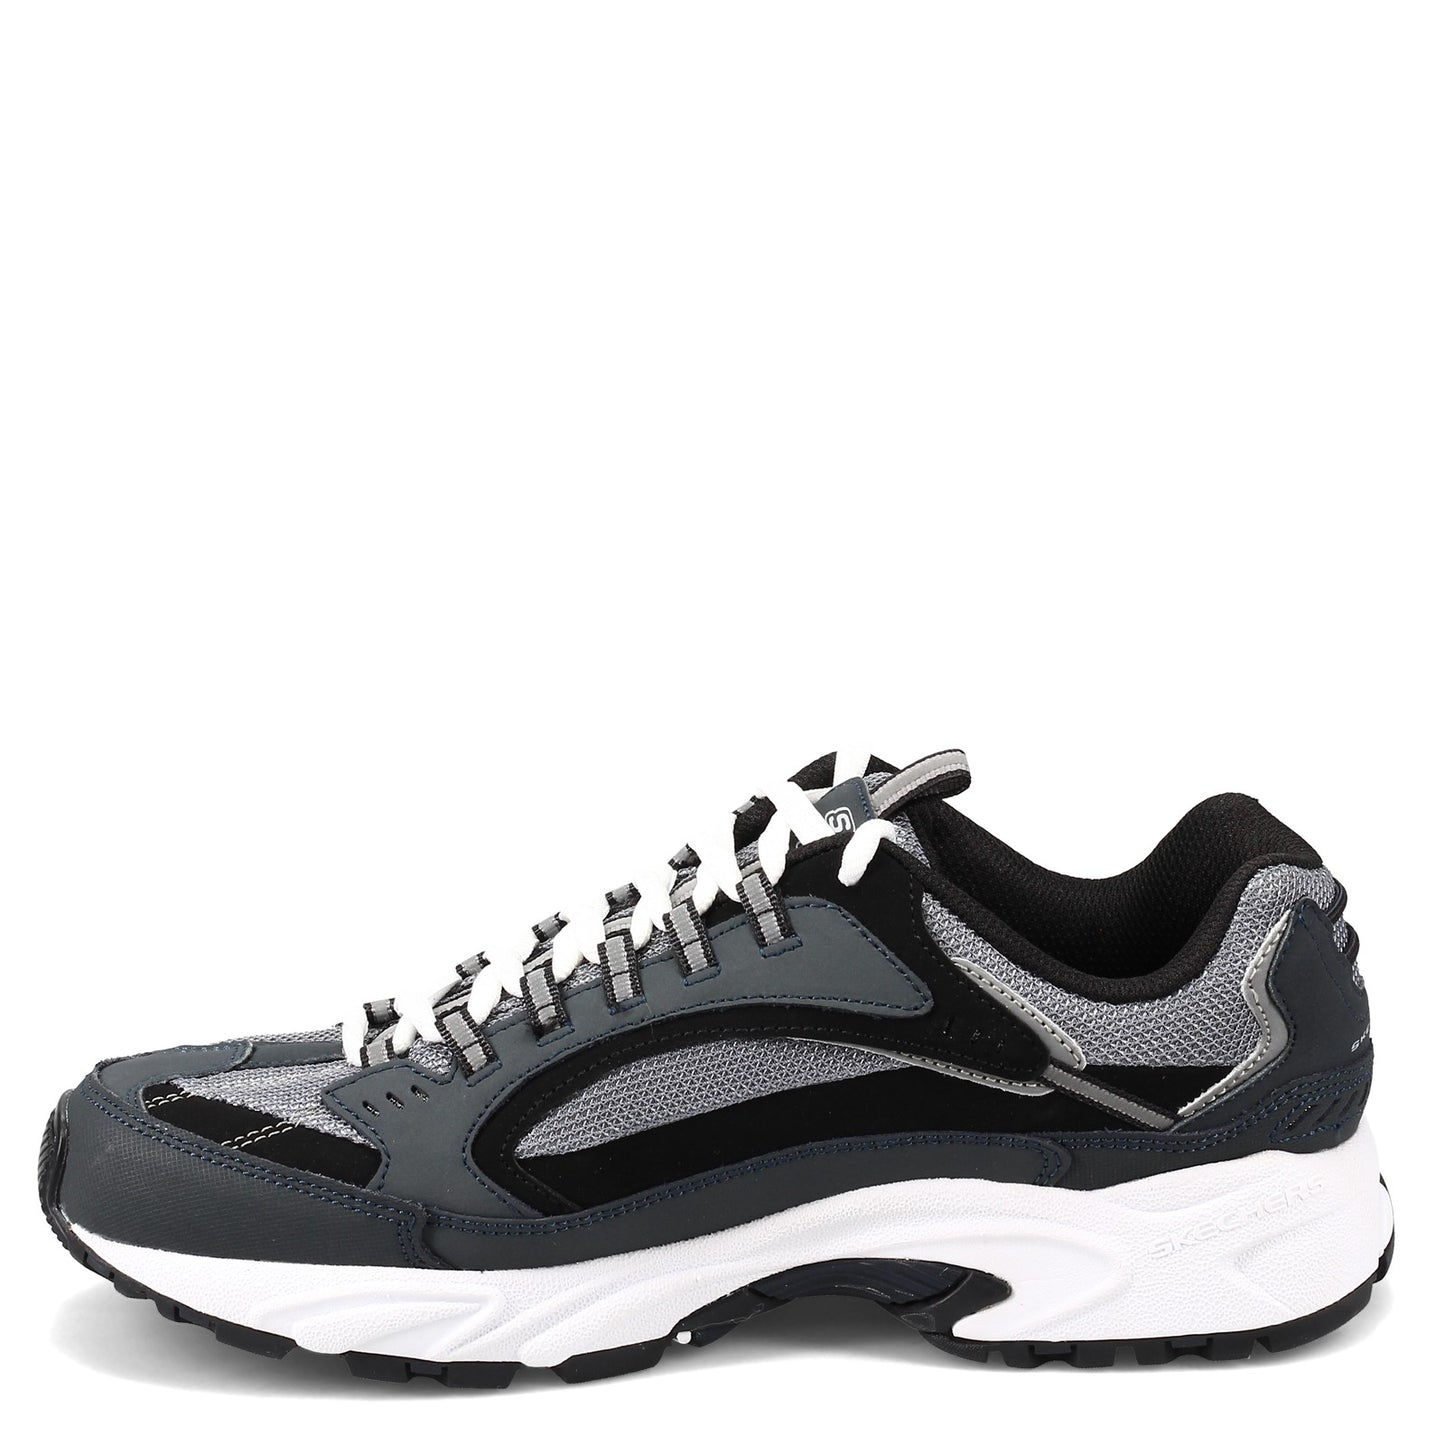 Peltz Shoes  Men's Skechers Stamina - Cutback Sneaker - Wide Width Navy/Black 51286EW-NVBK